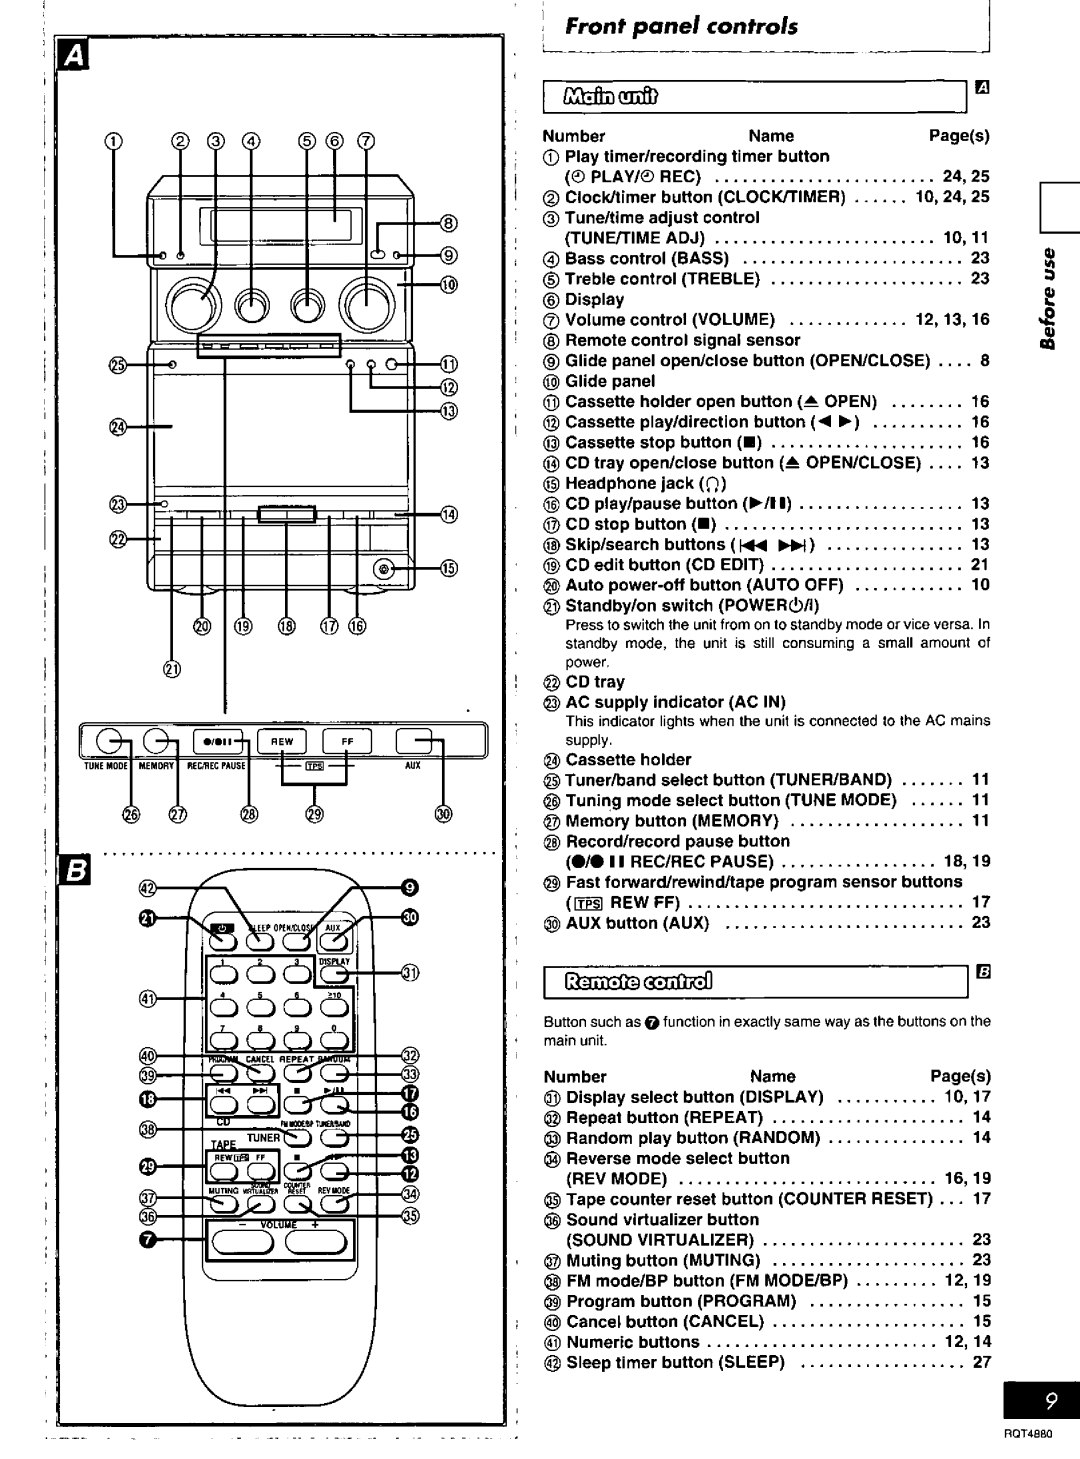 Panasonic SC-PM20 manual 